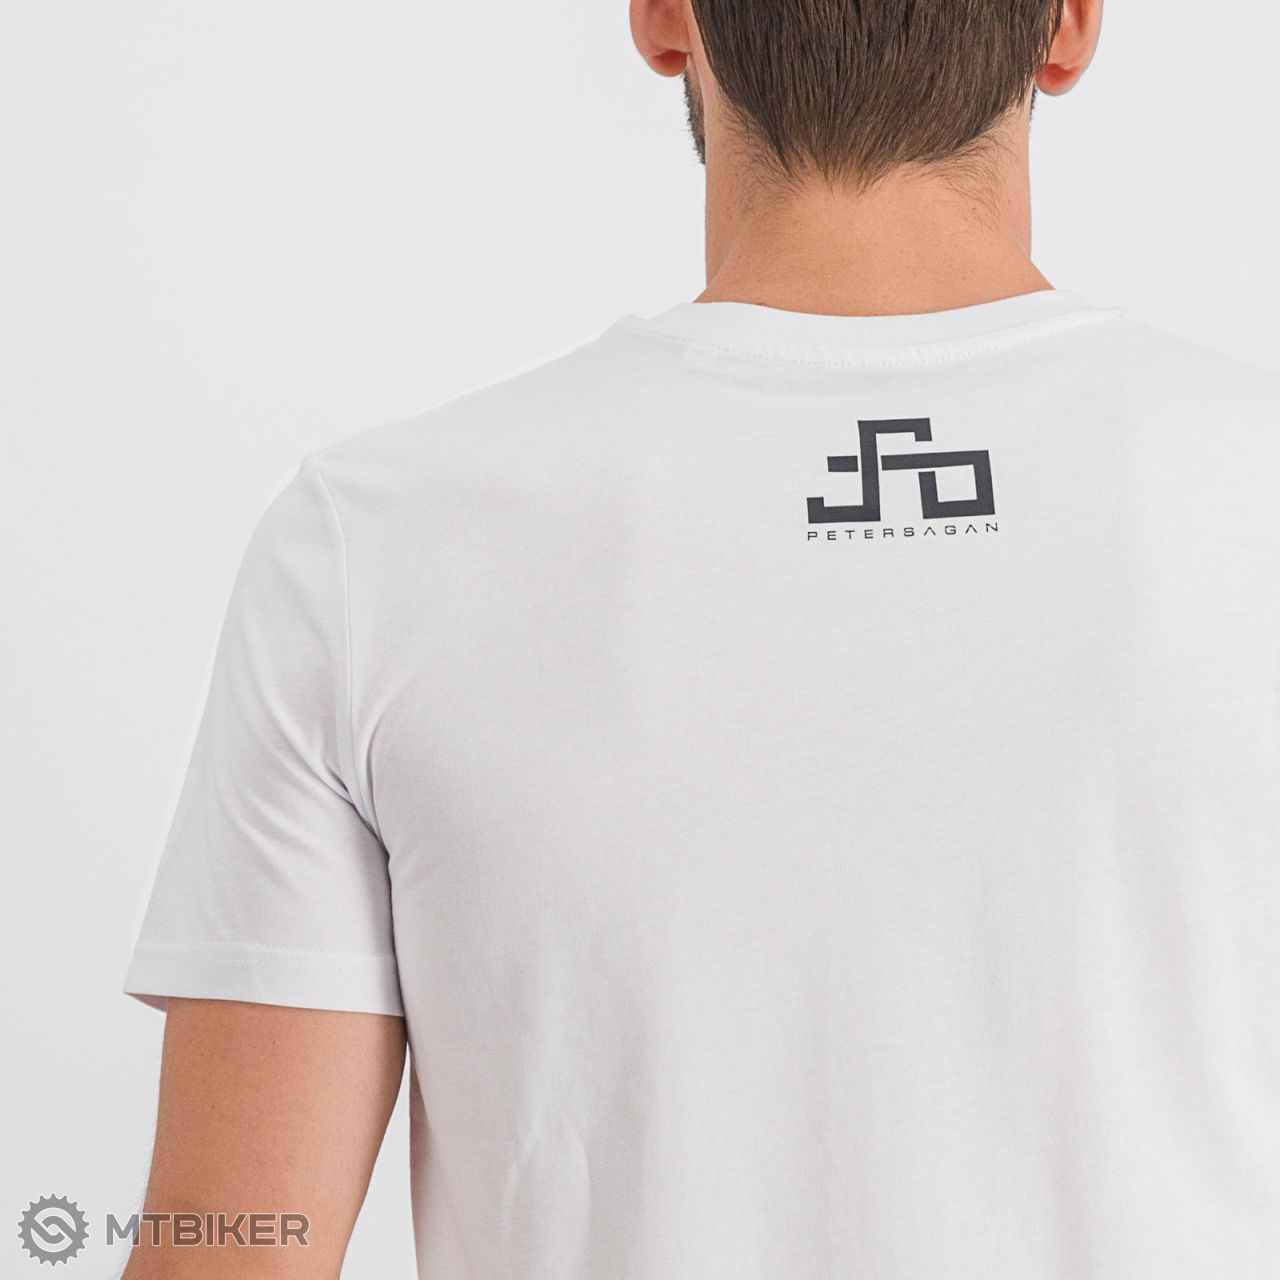 Sportful PETER SAGAN 111 tričko, biela - MTHIKER Shop